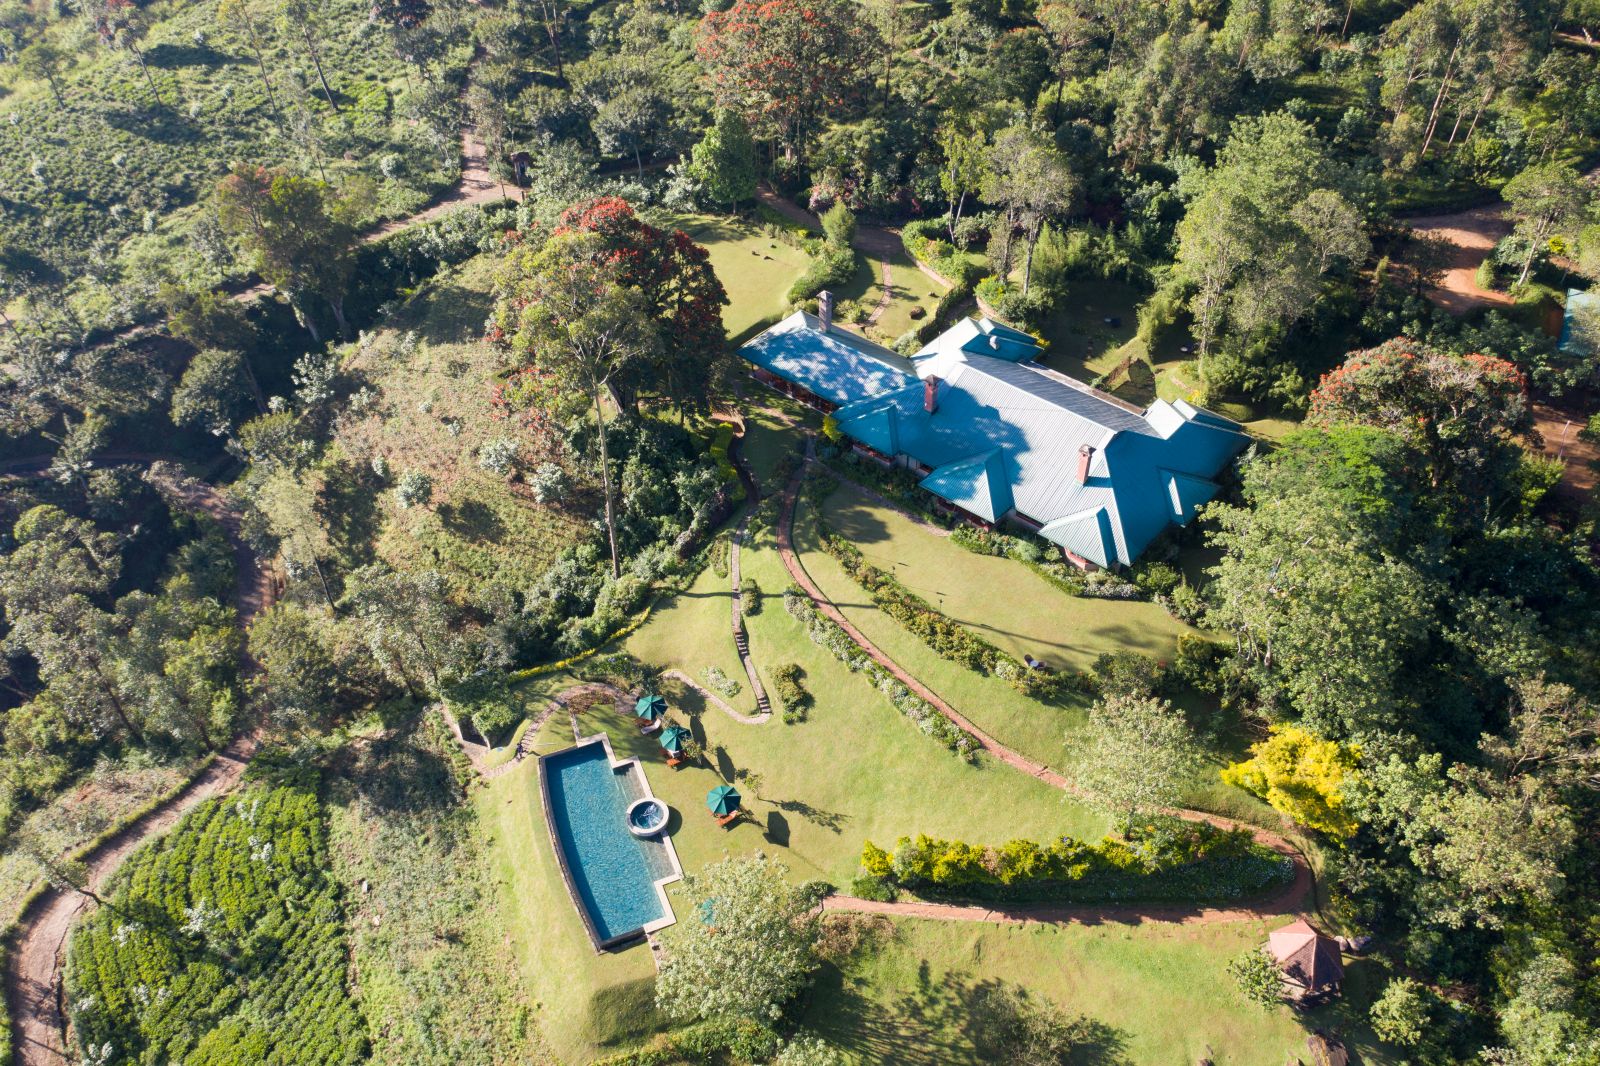 Aerial view of Dunkeld Bungalow Ceylon Tea Trails Sri Lanka